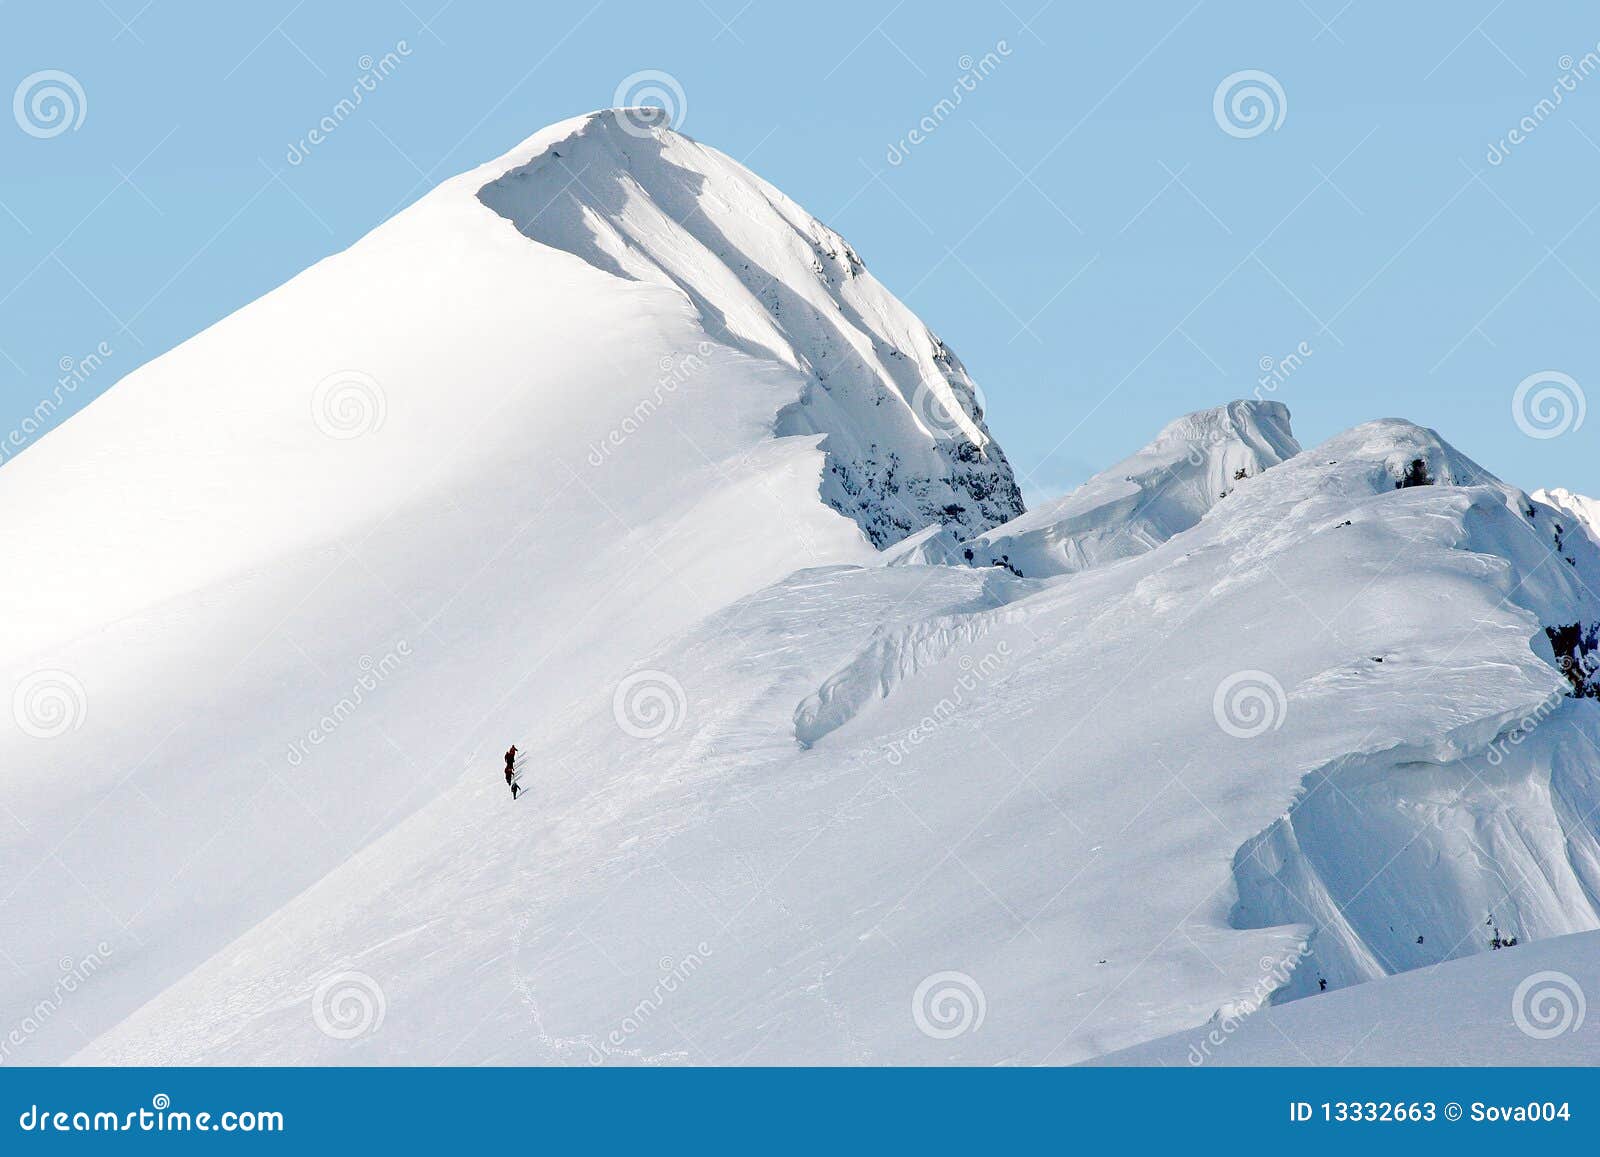 mountaineering in swiss alps